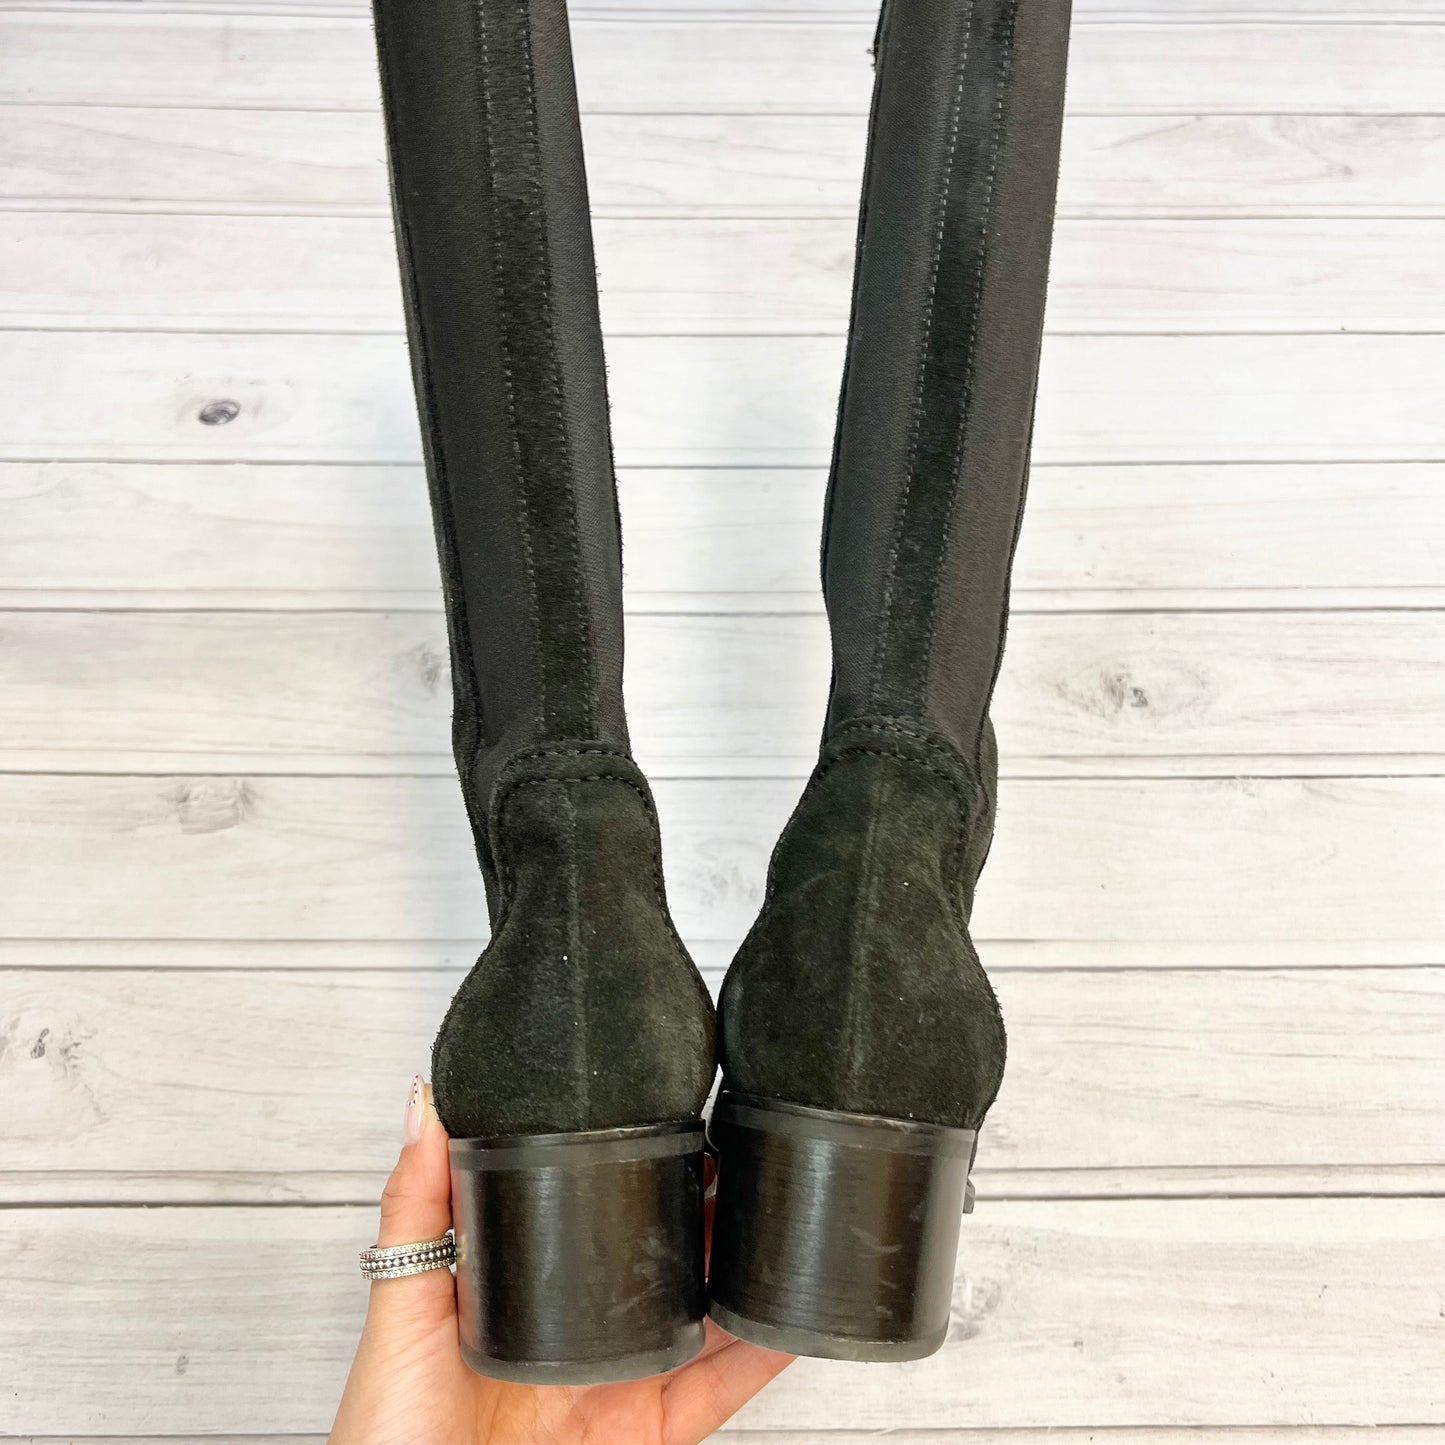 Boots Designer By Aquatalia  Size: 8.5